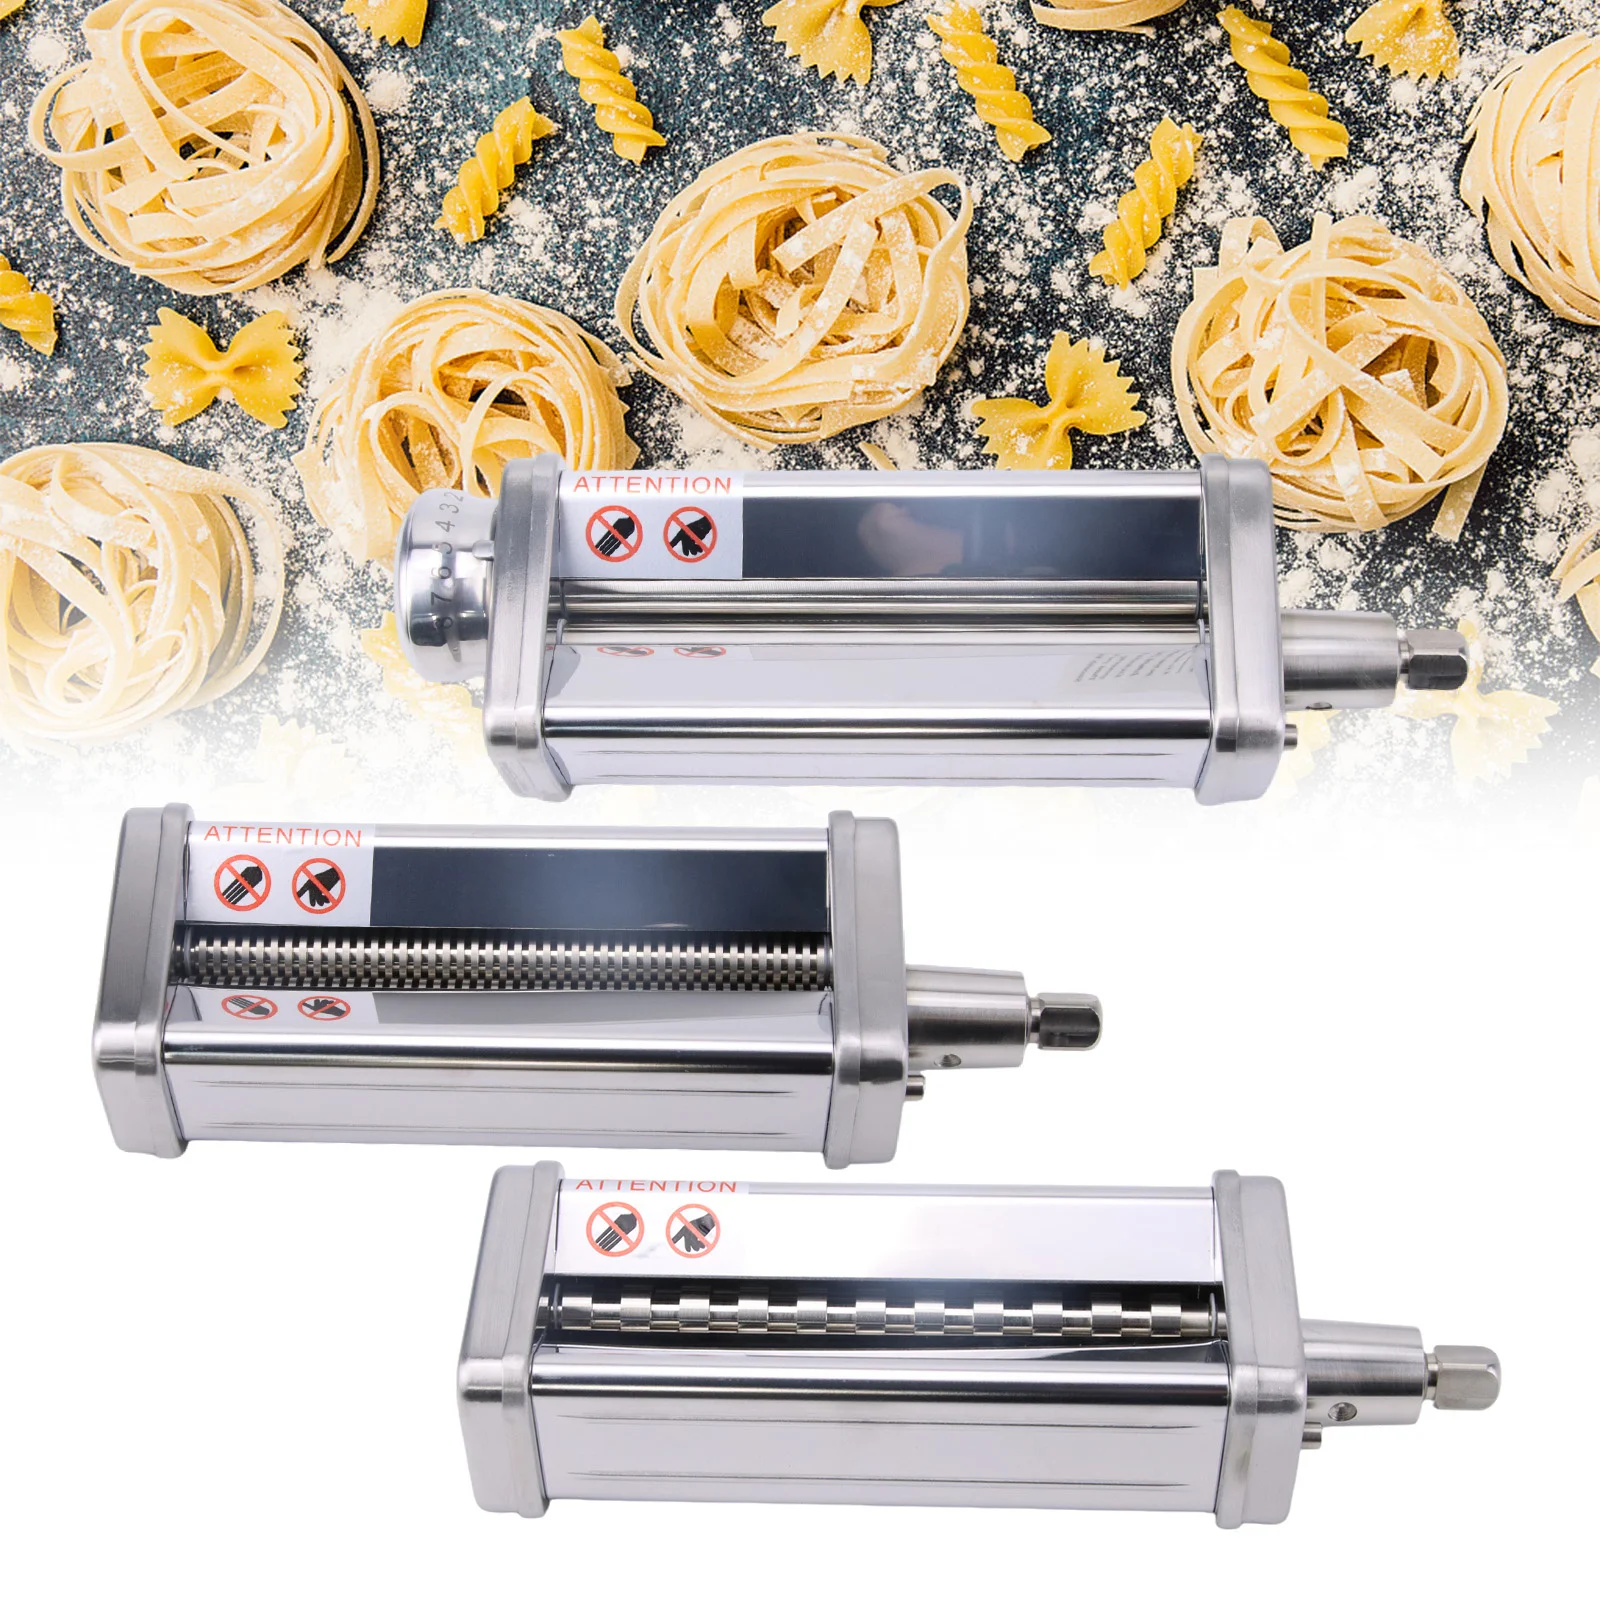 Stand Blender Replacement Accessories for KitchenAid KRAV,Pasta Roller  Attachment Wonton Machine Noodle Makers Parts - AliExpress